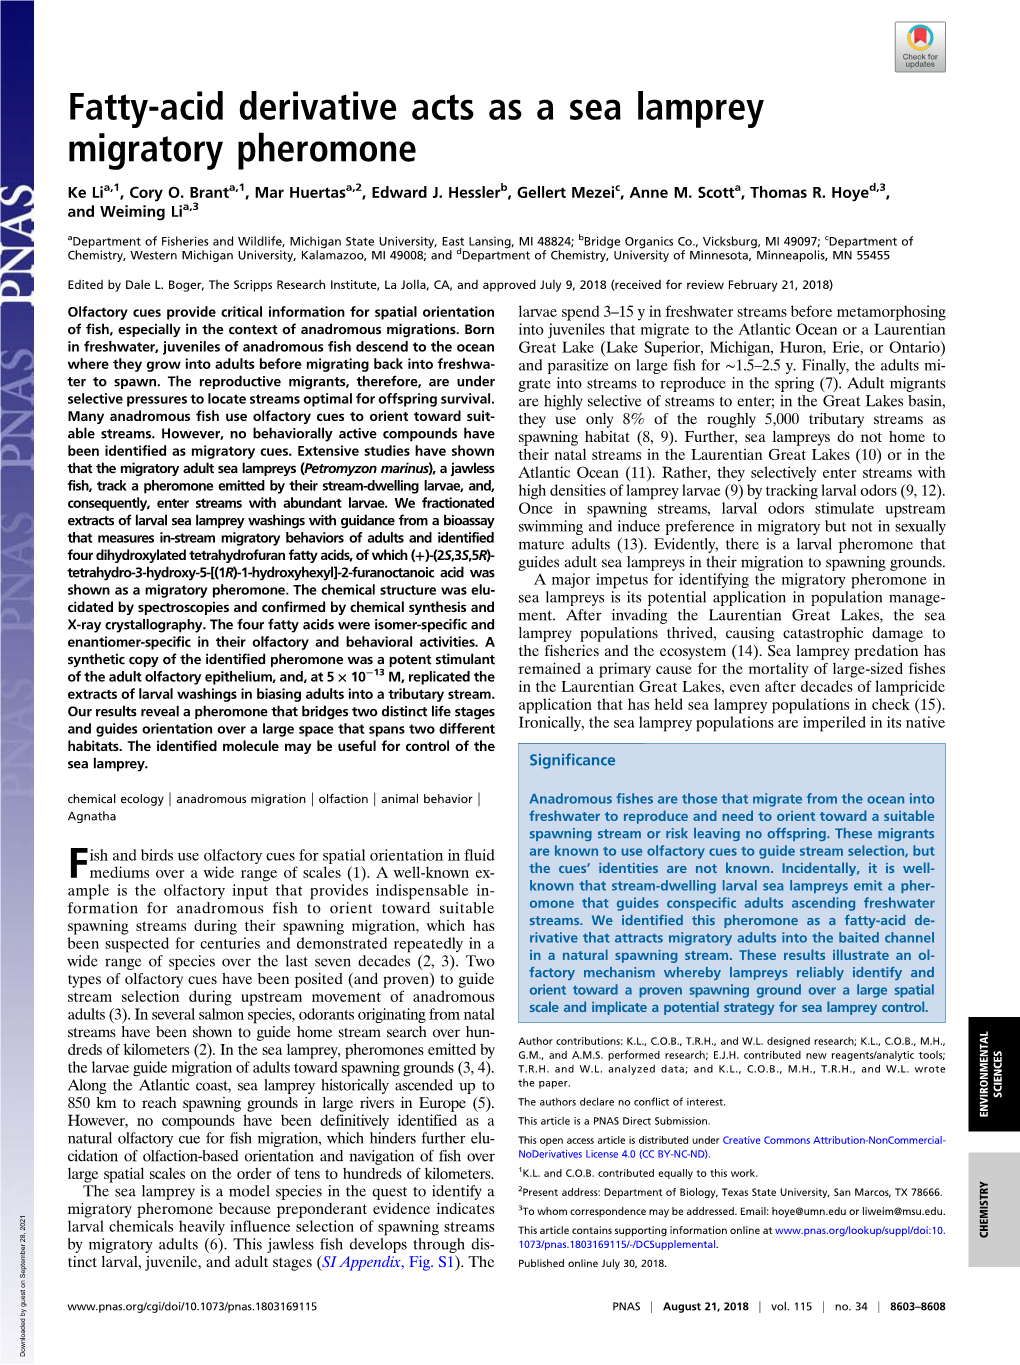 Fatty-Acid Derivative Acts As a Sea Lamprey Migratory Pheromone